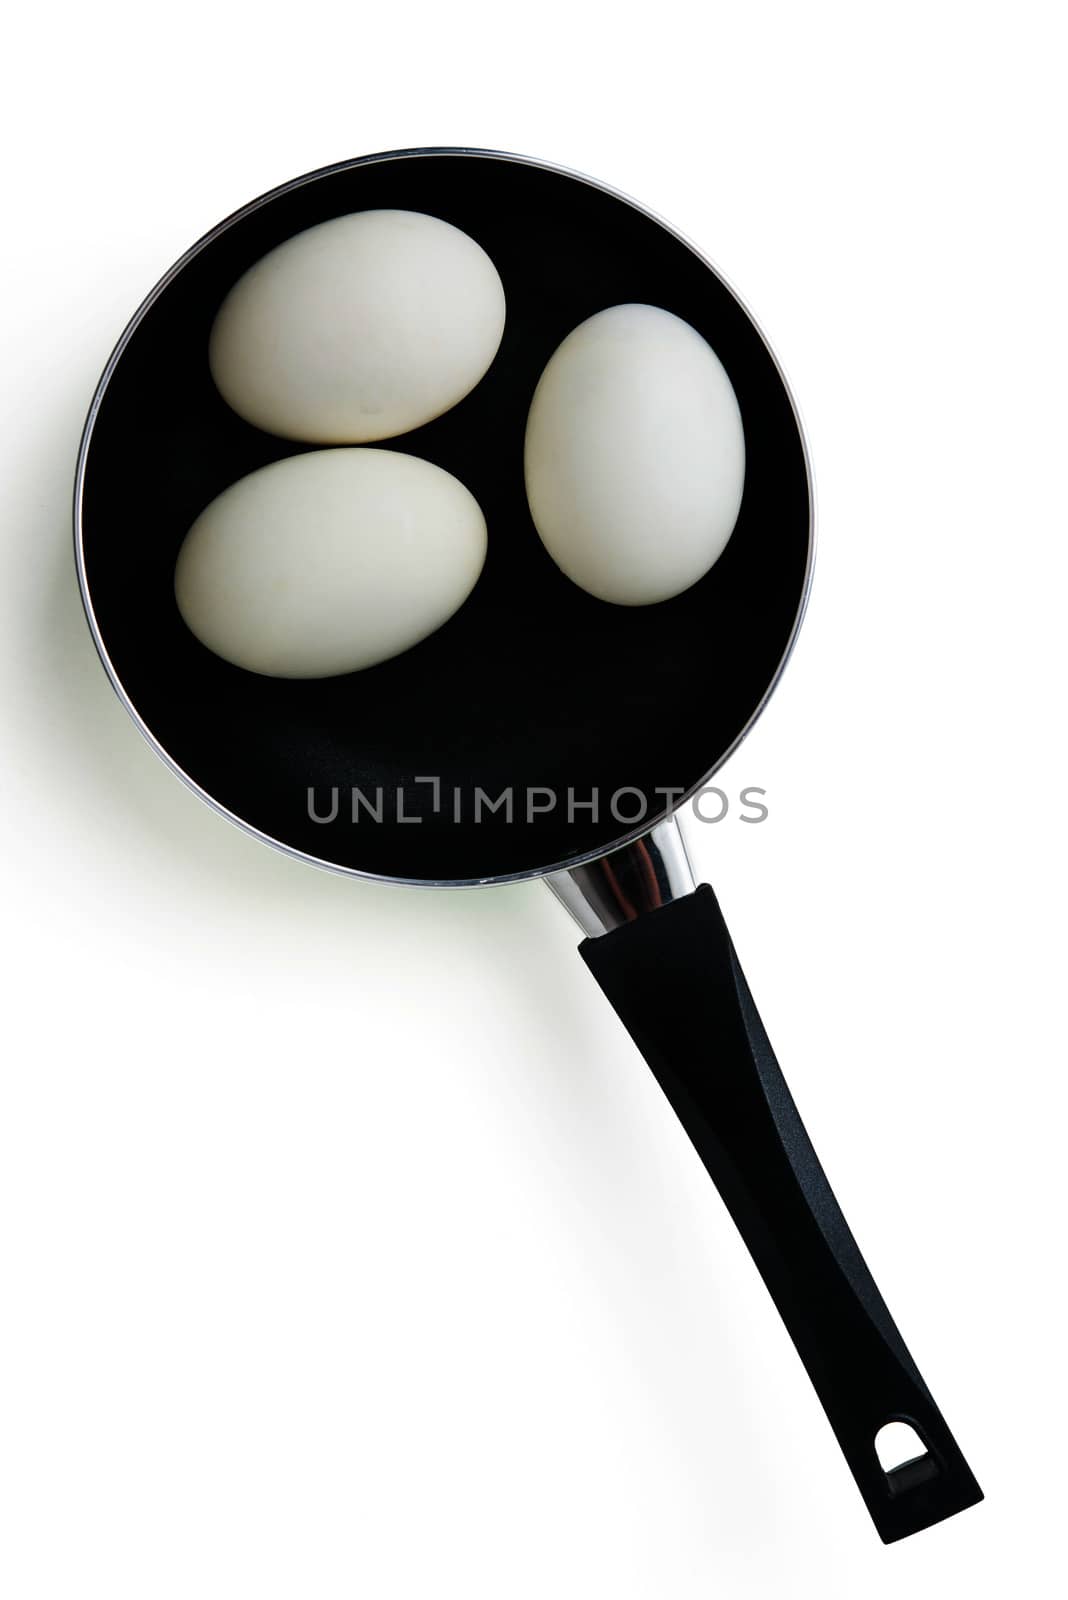 eggs in a pan by antpkr